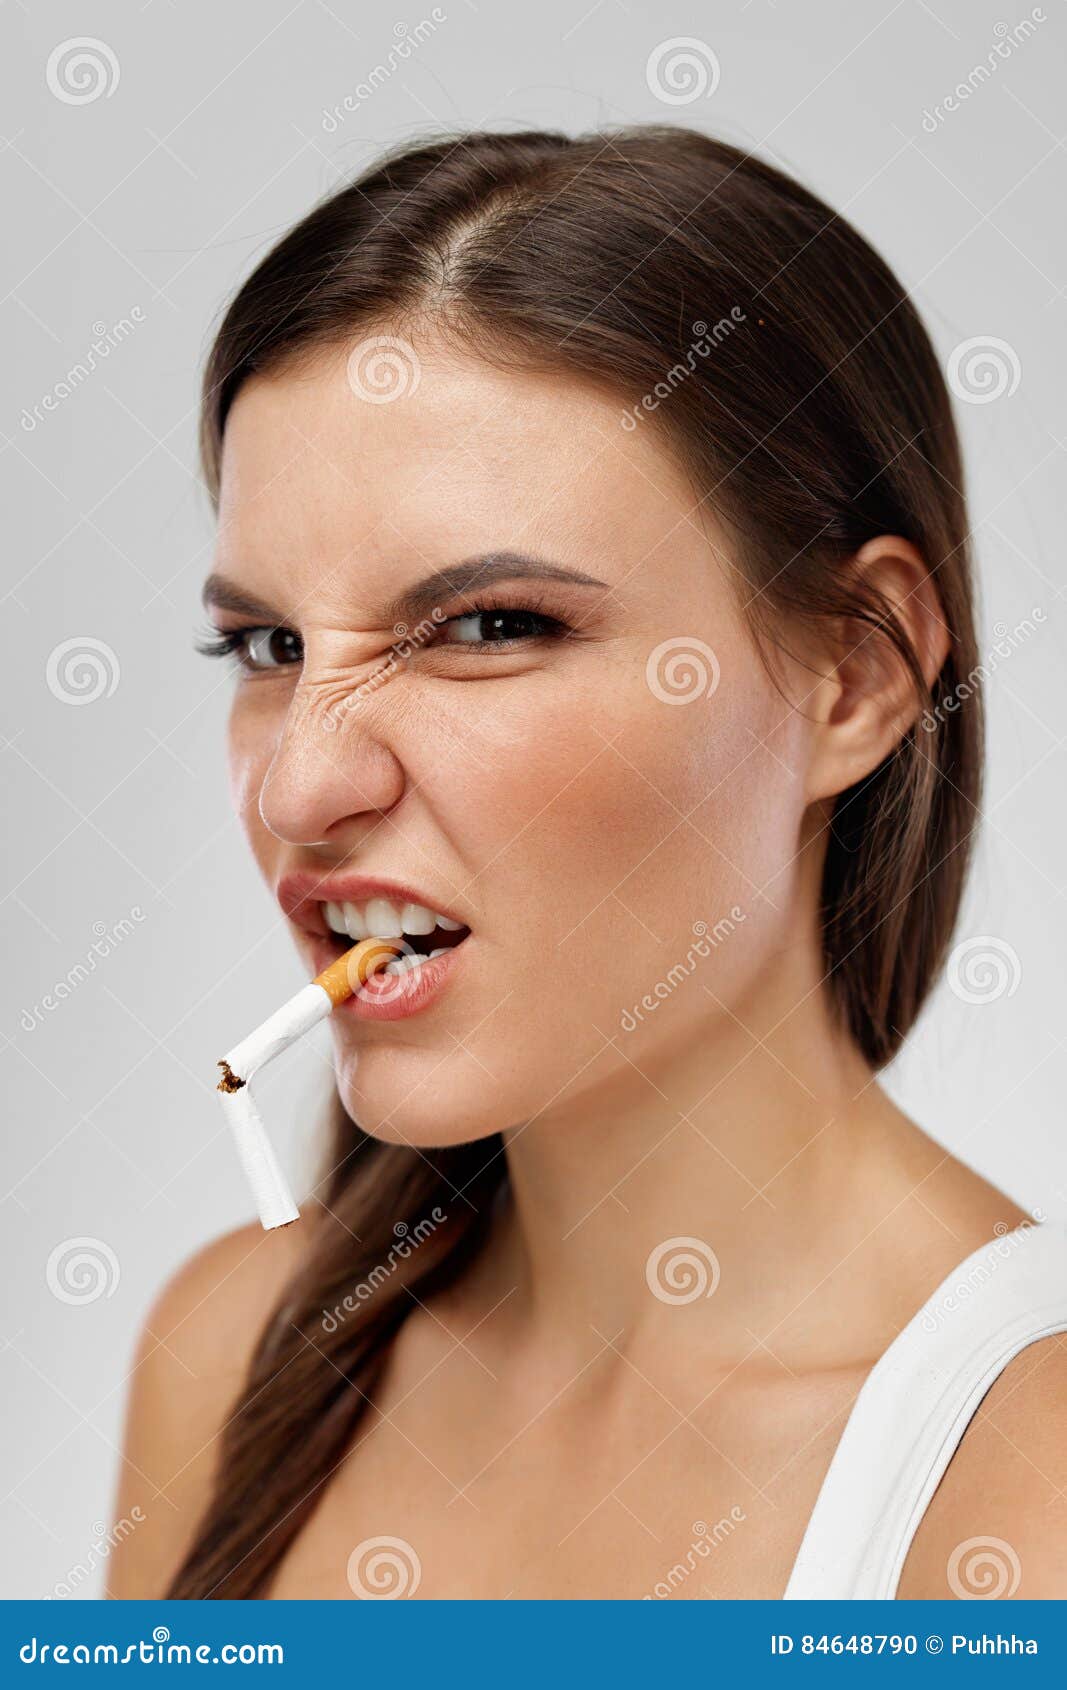 Cigarette Facial